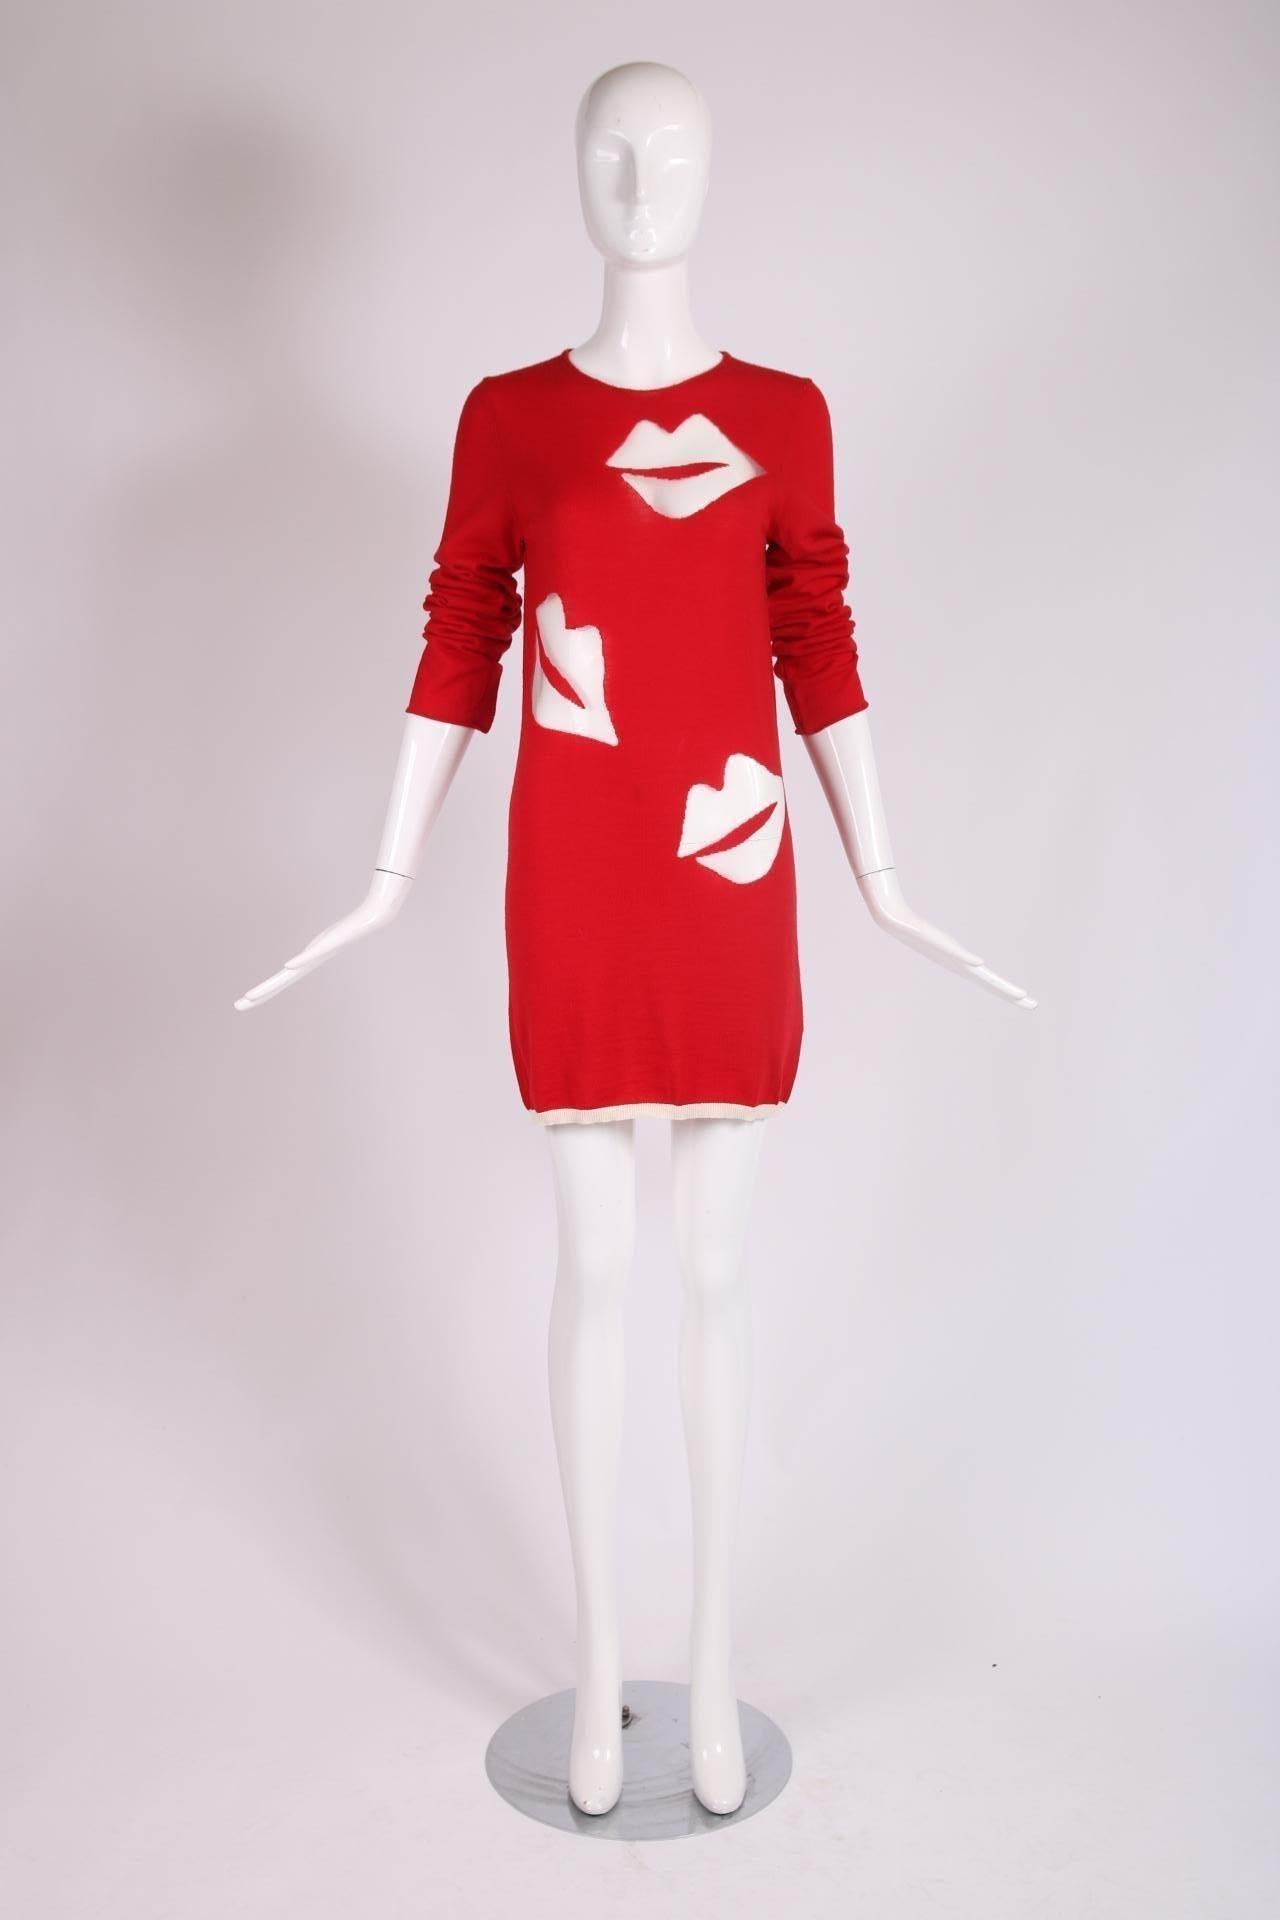 Comme des Garcons Pulloverkleid aus roter Wolle mit transparentem Lippenmotiv 2008 (Rot) im Angebot